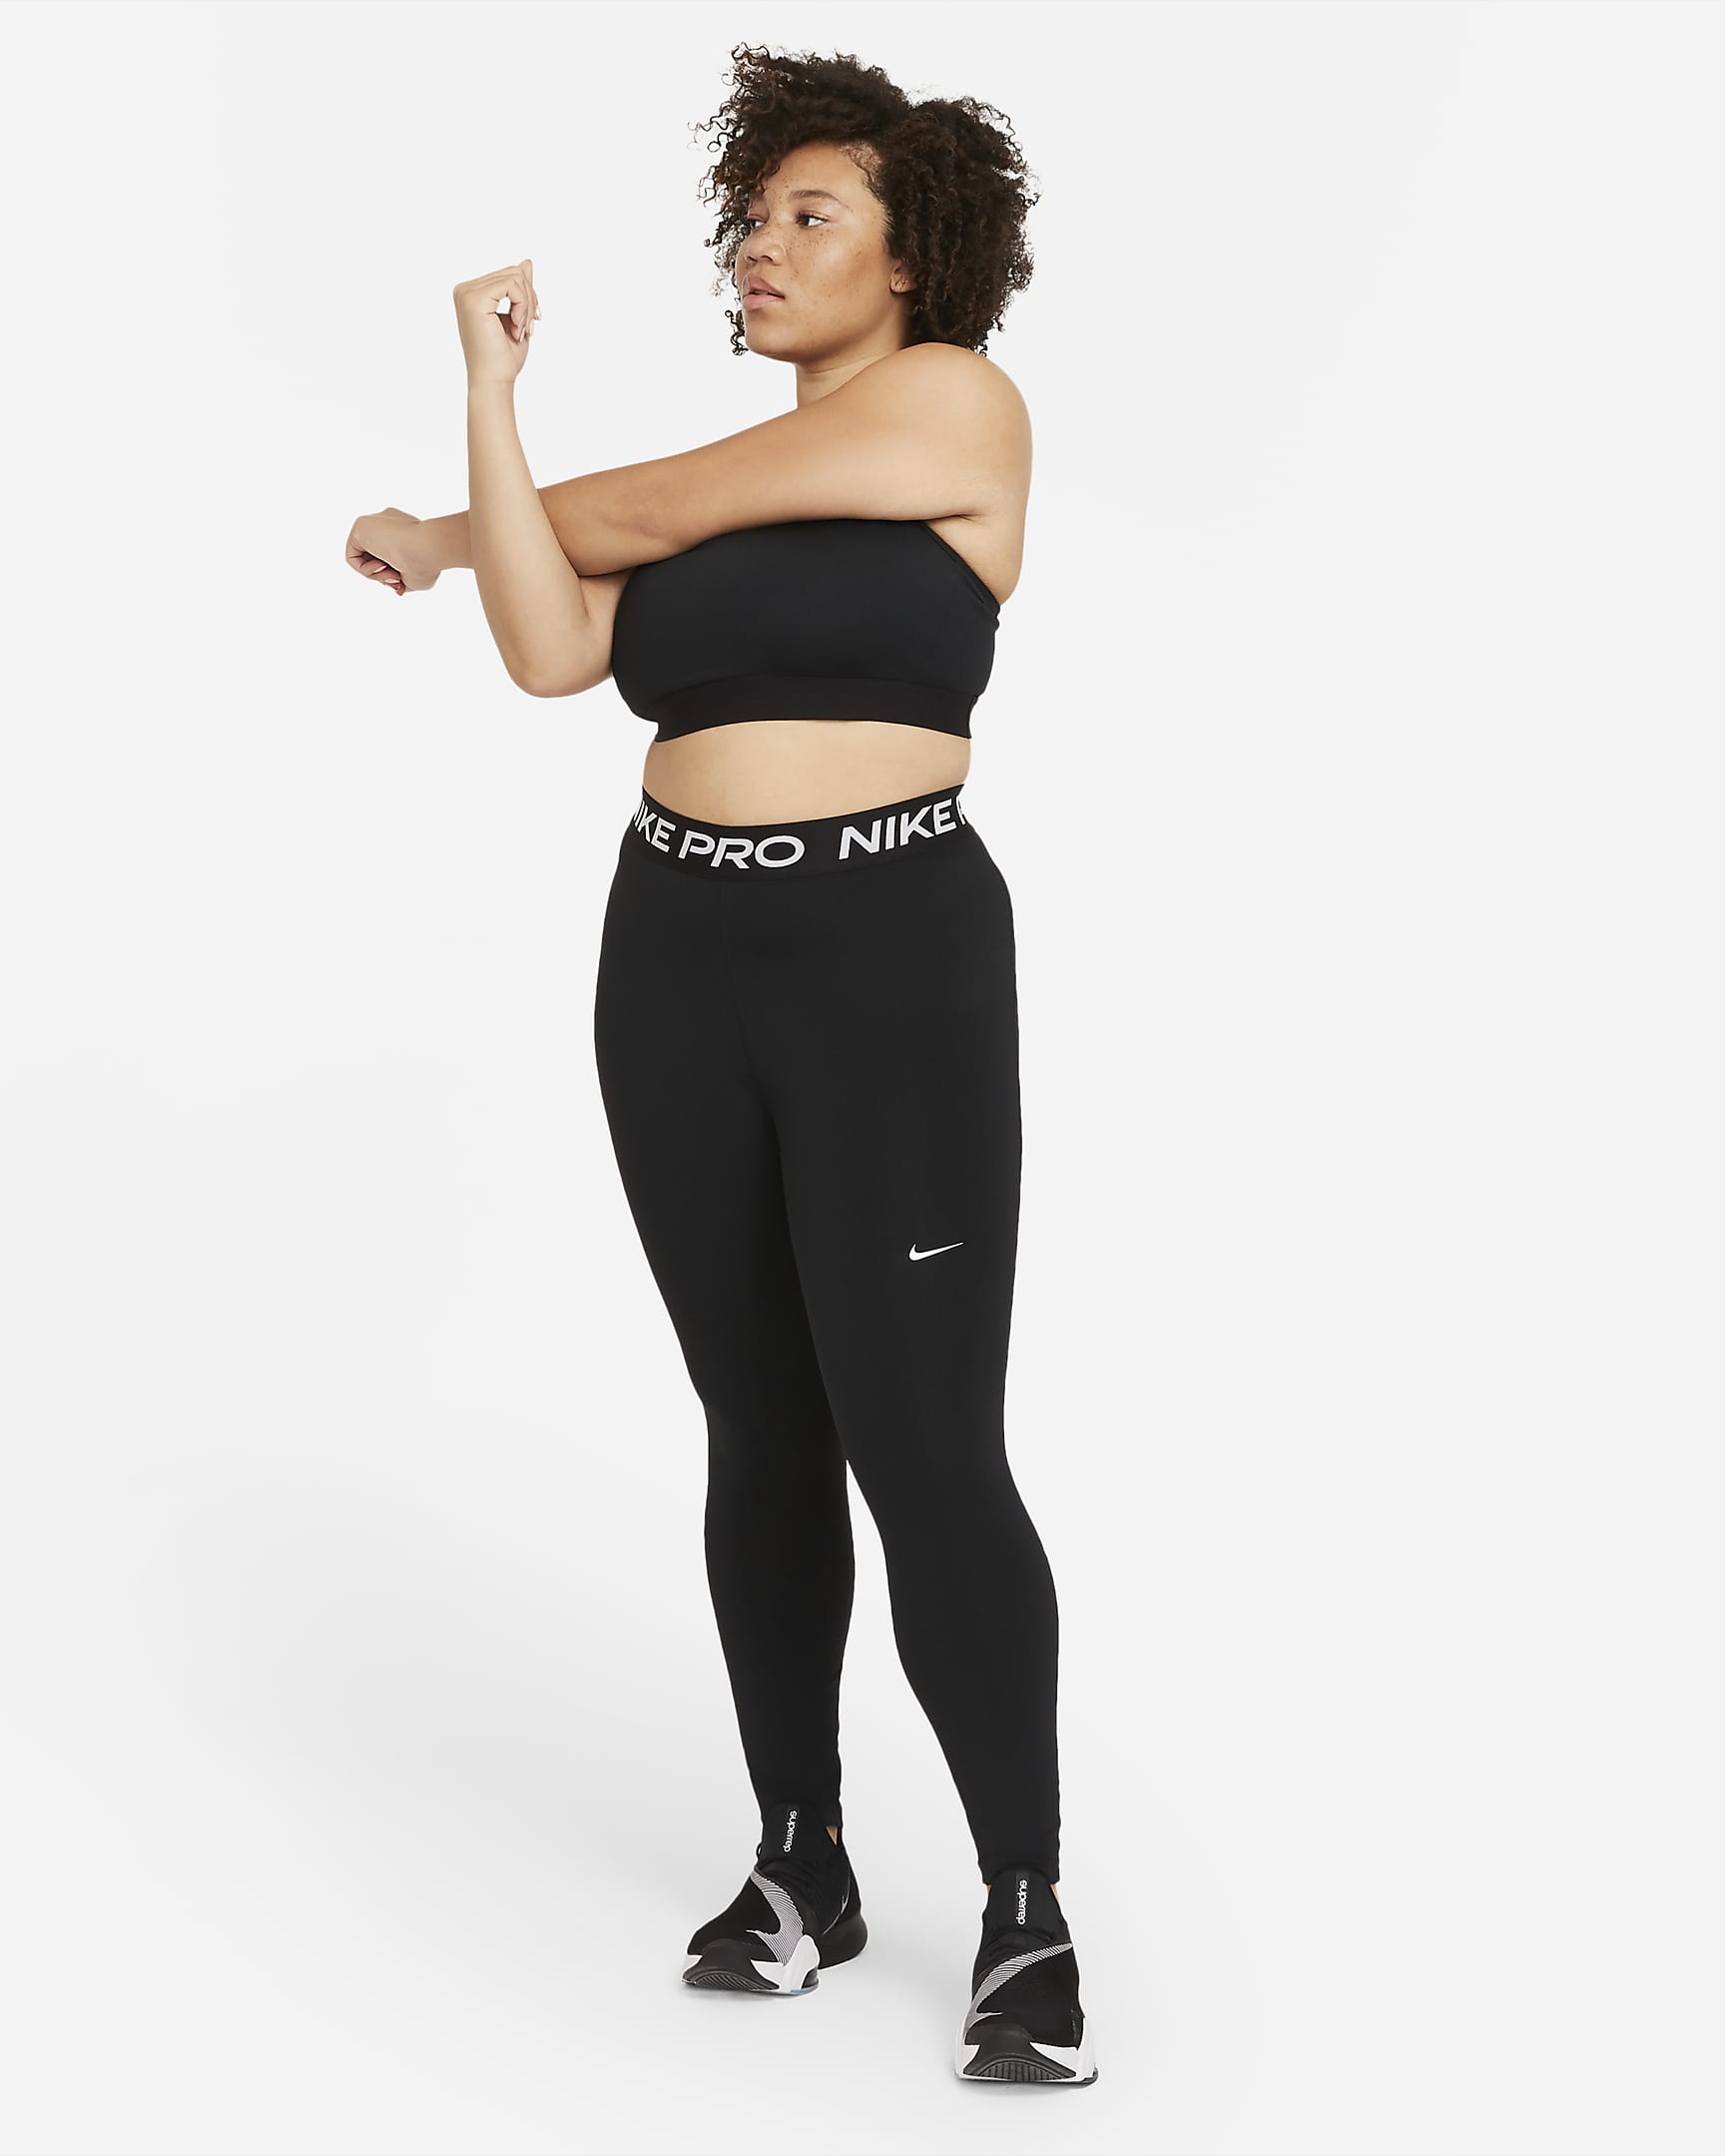 Nike Pro 365 Women's Leggings (Plus Size). Nike ZA